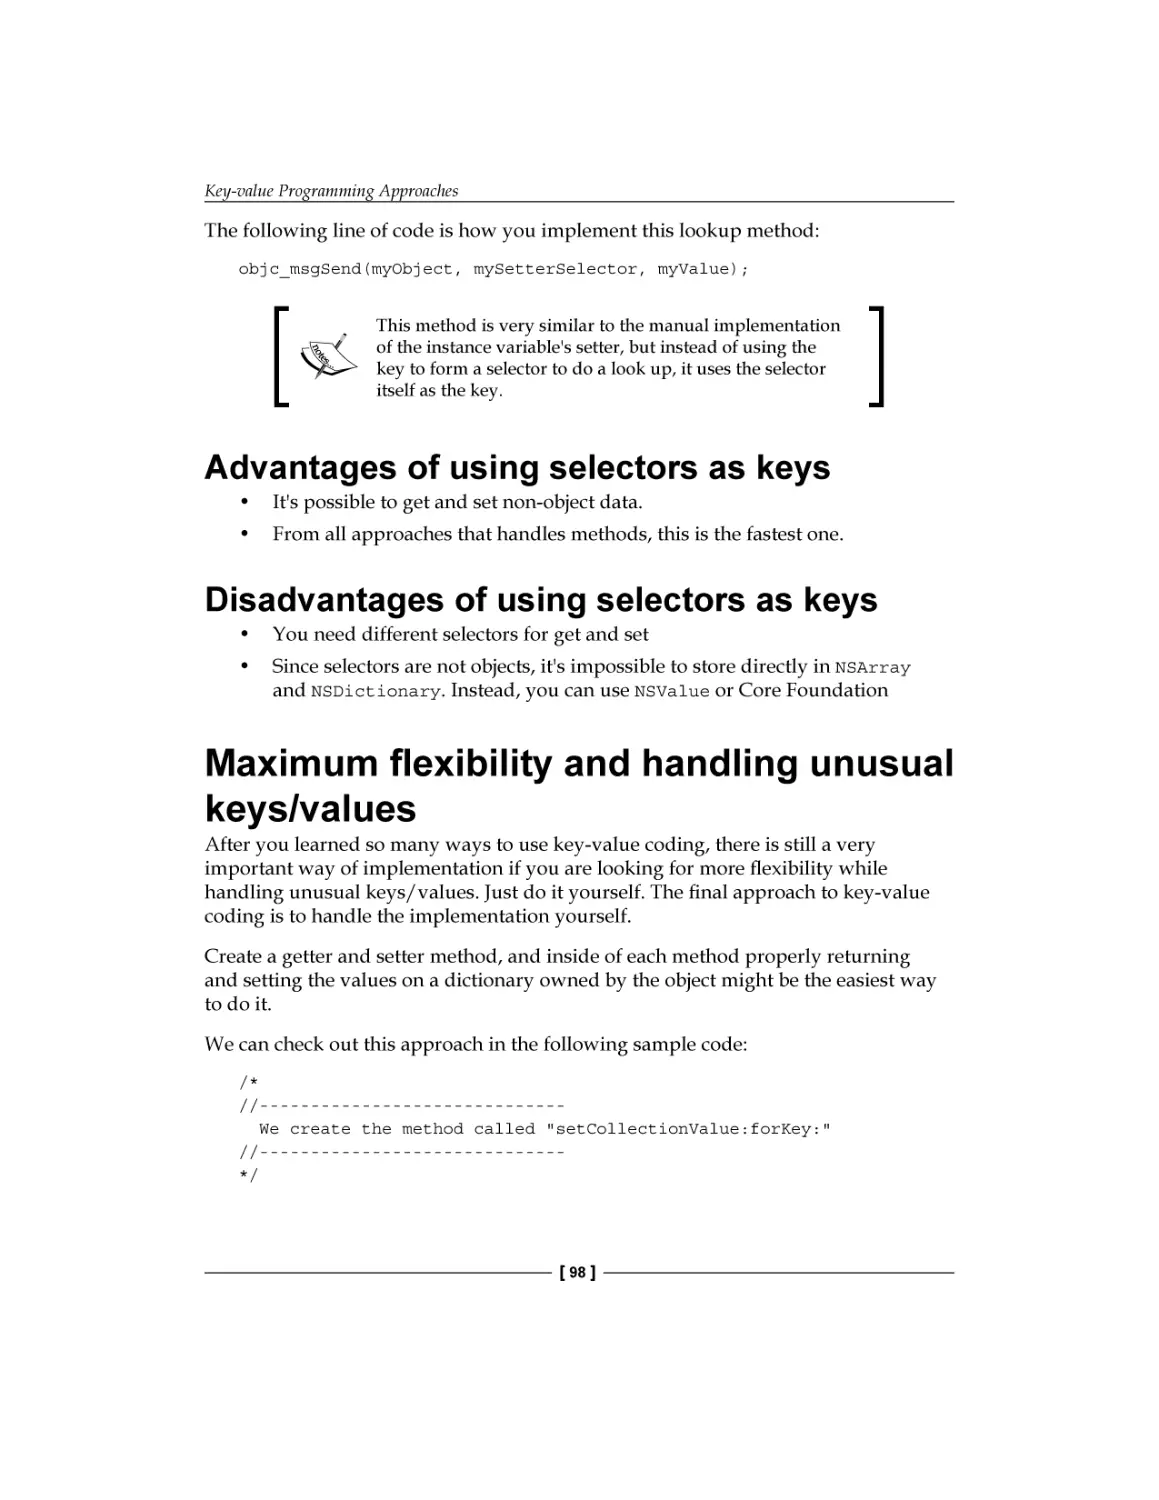 Advantages of using selectors as keys
Disadvantages of using selectors as keys
Maximum flexibility and handling unusual keys/values